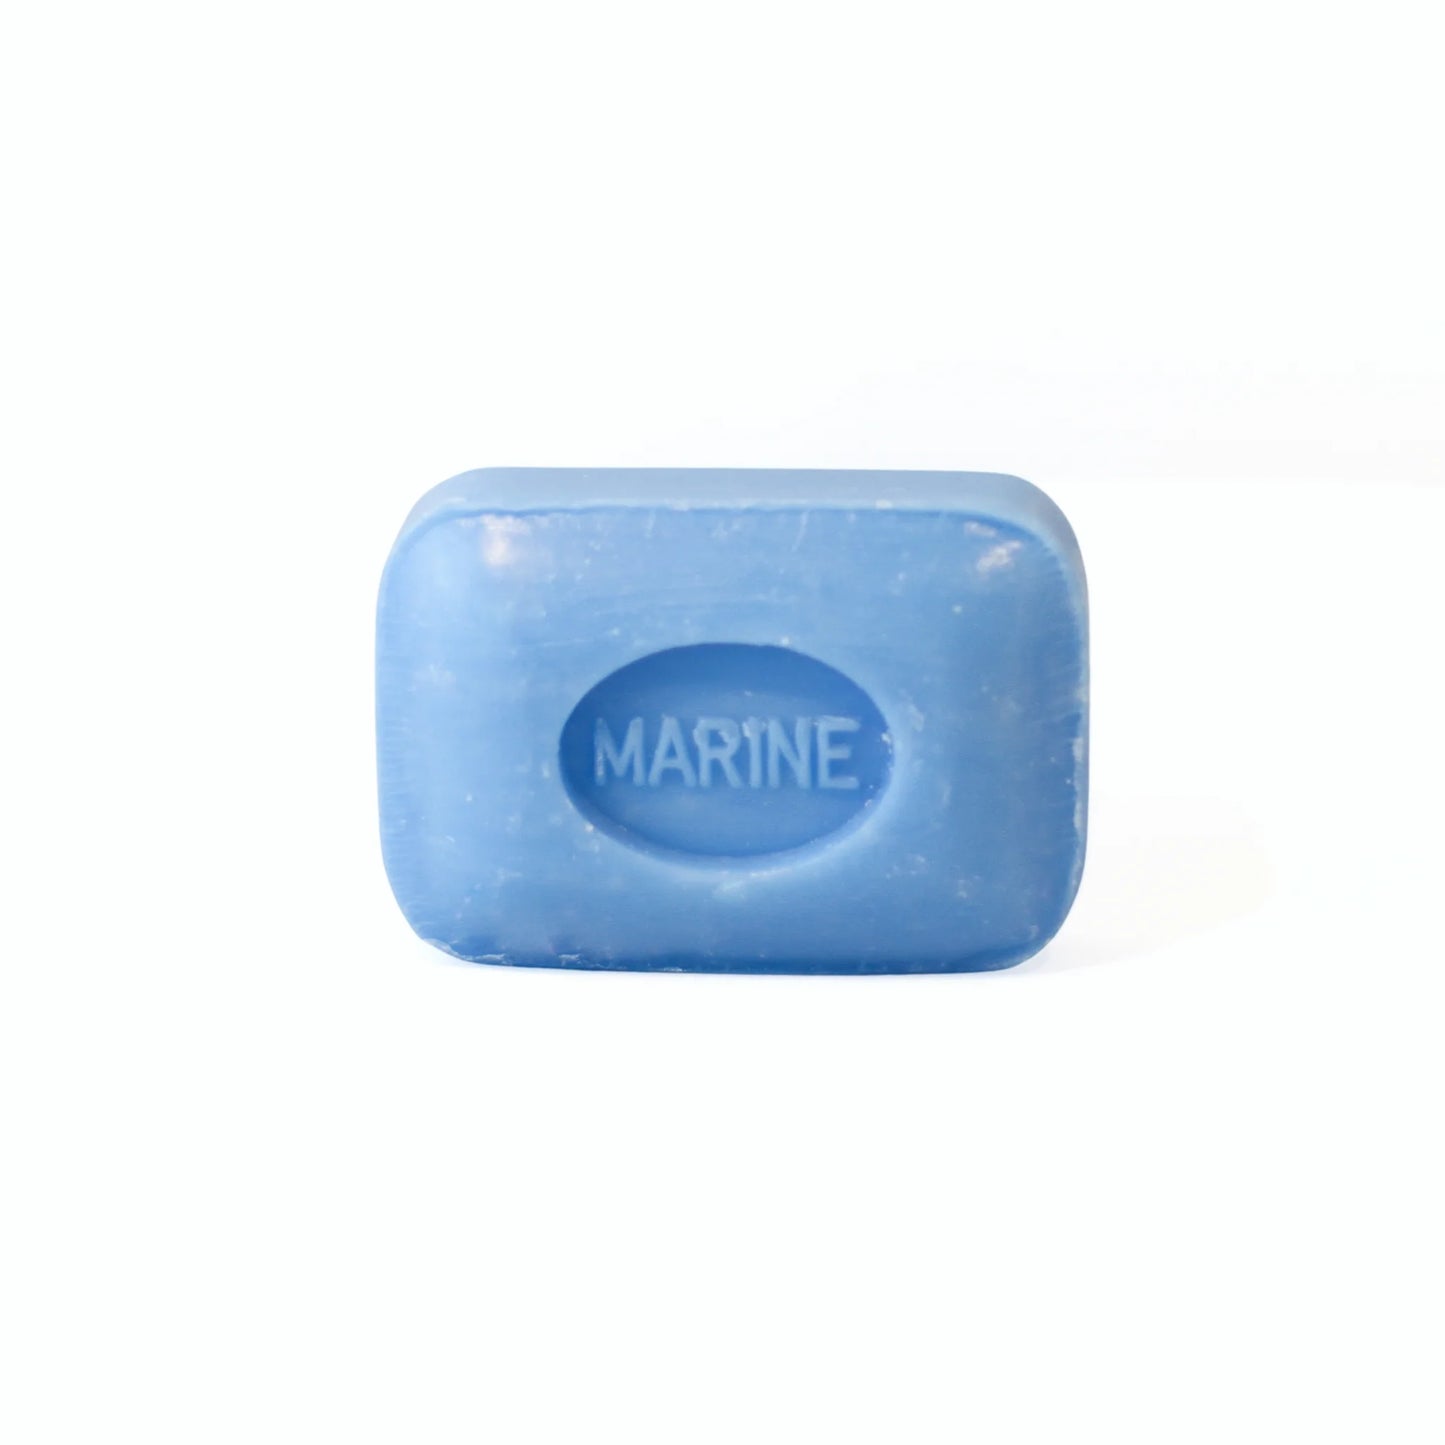 Soap 100g MARINE (Fresh marine), LS